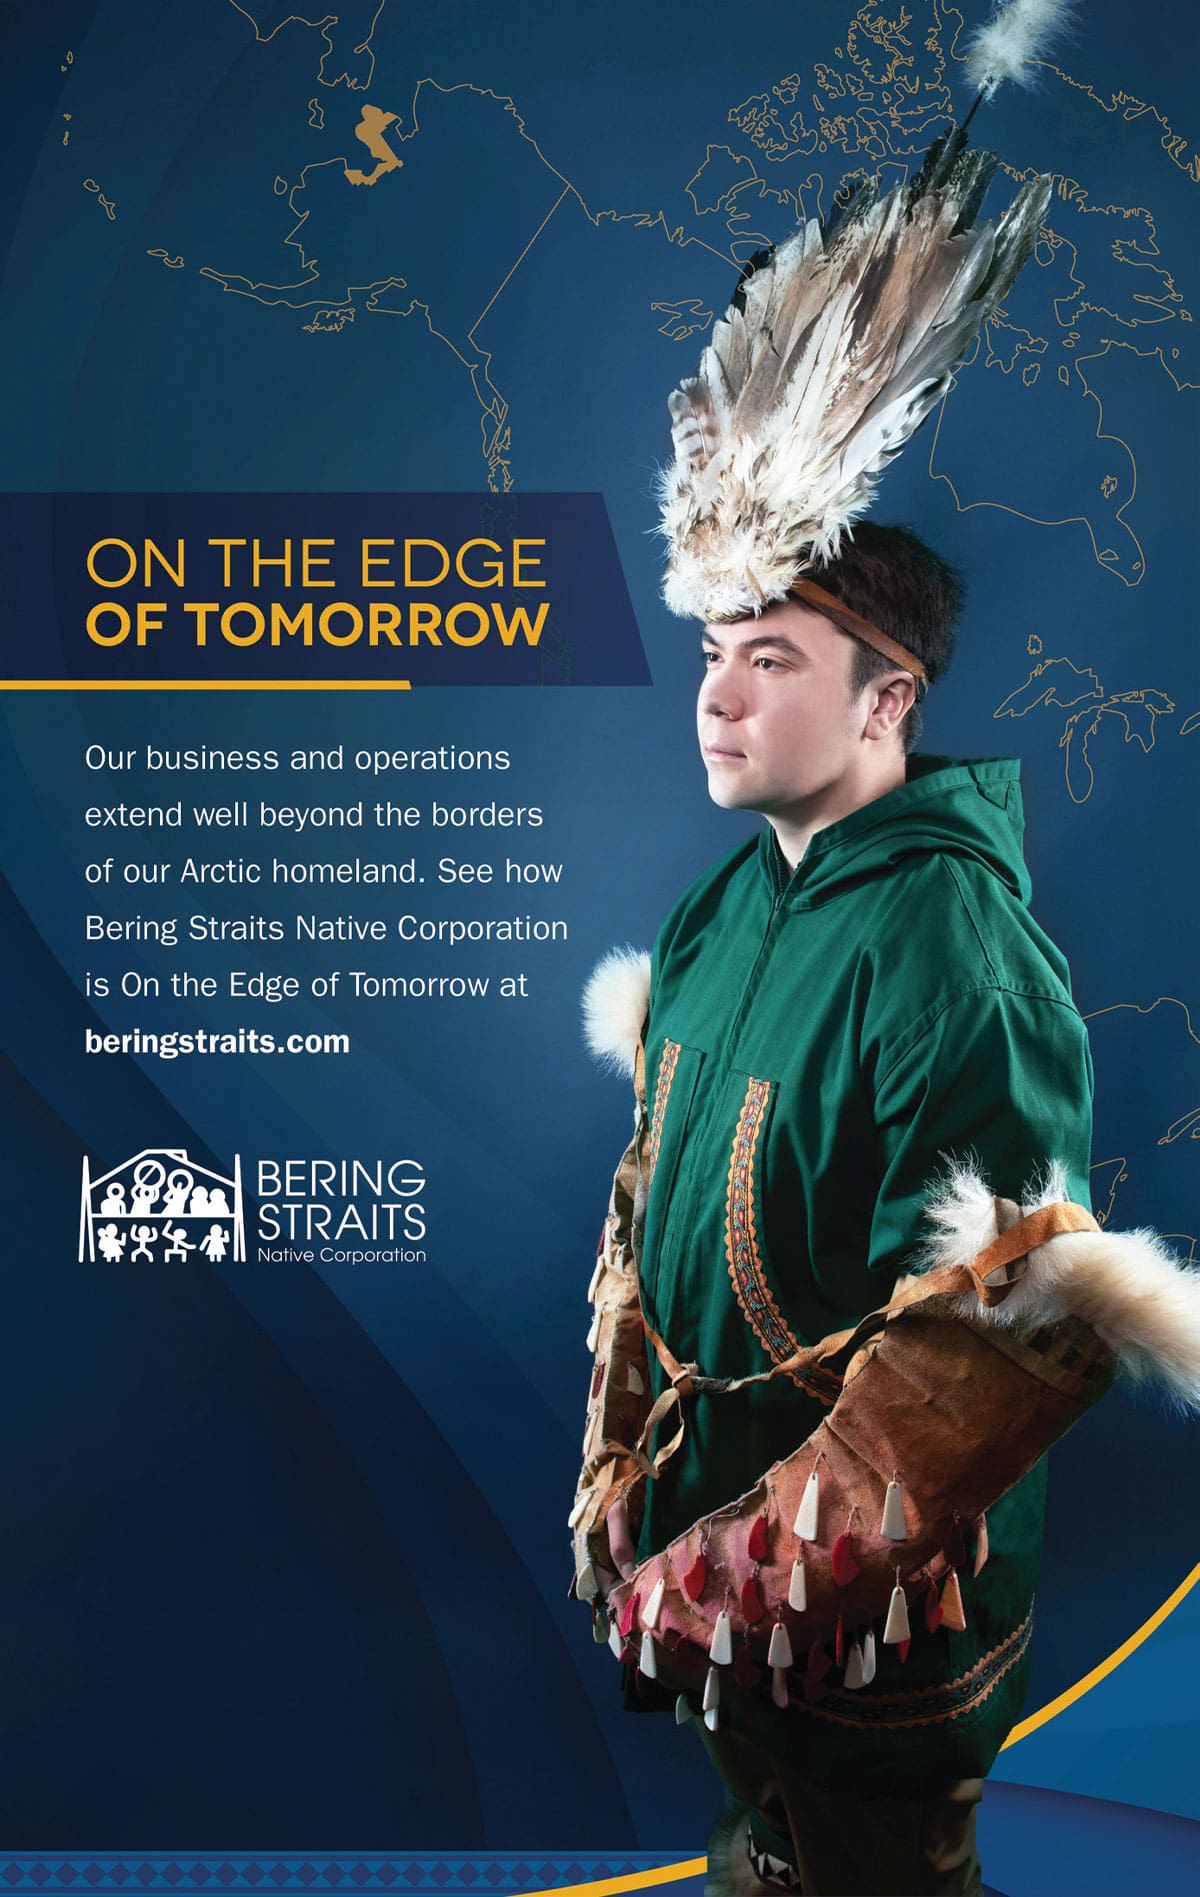 Alaska Business Magazine - Bering Straits Native Corporation Advertisement